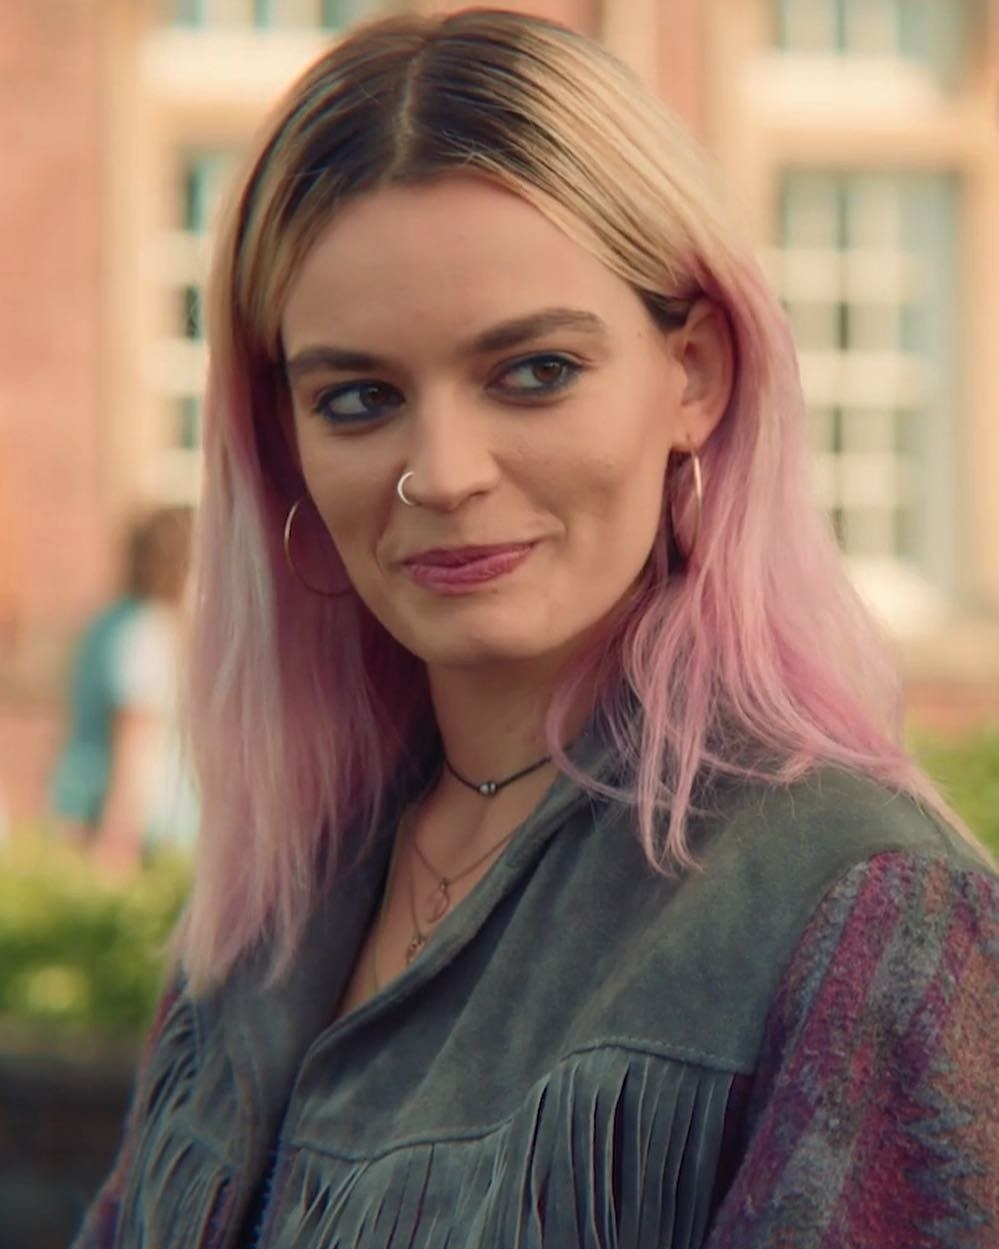 Emma as Maeve wearing a ruffle jacket and smiling sideways